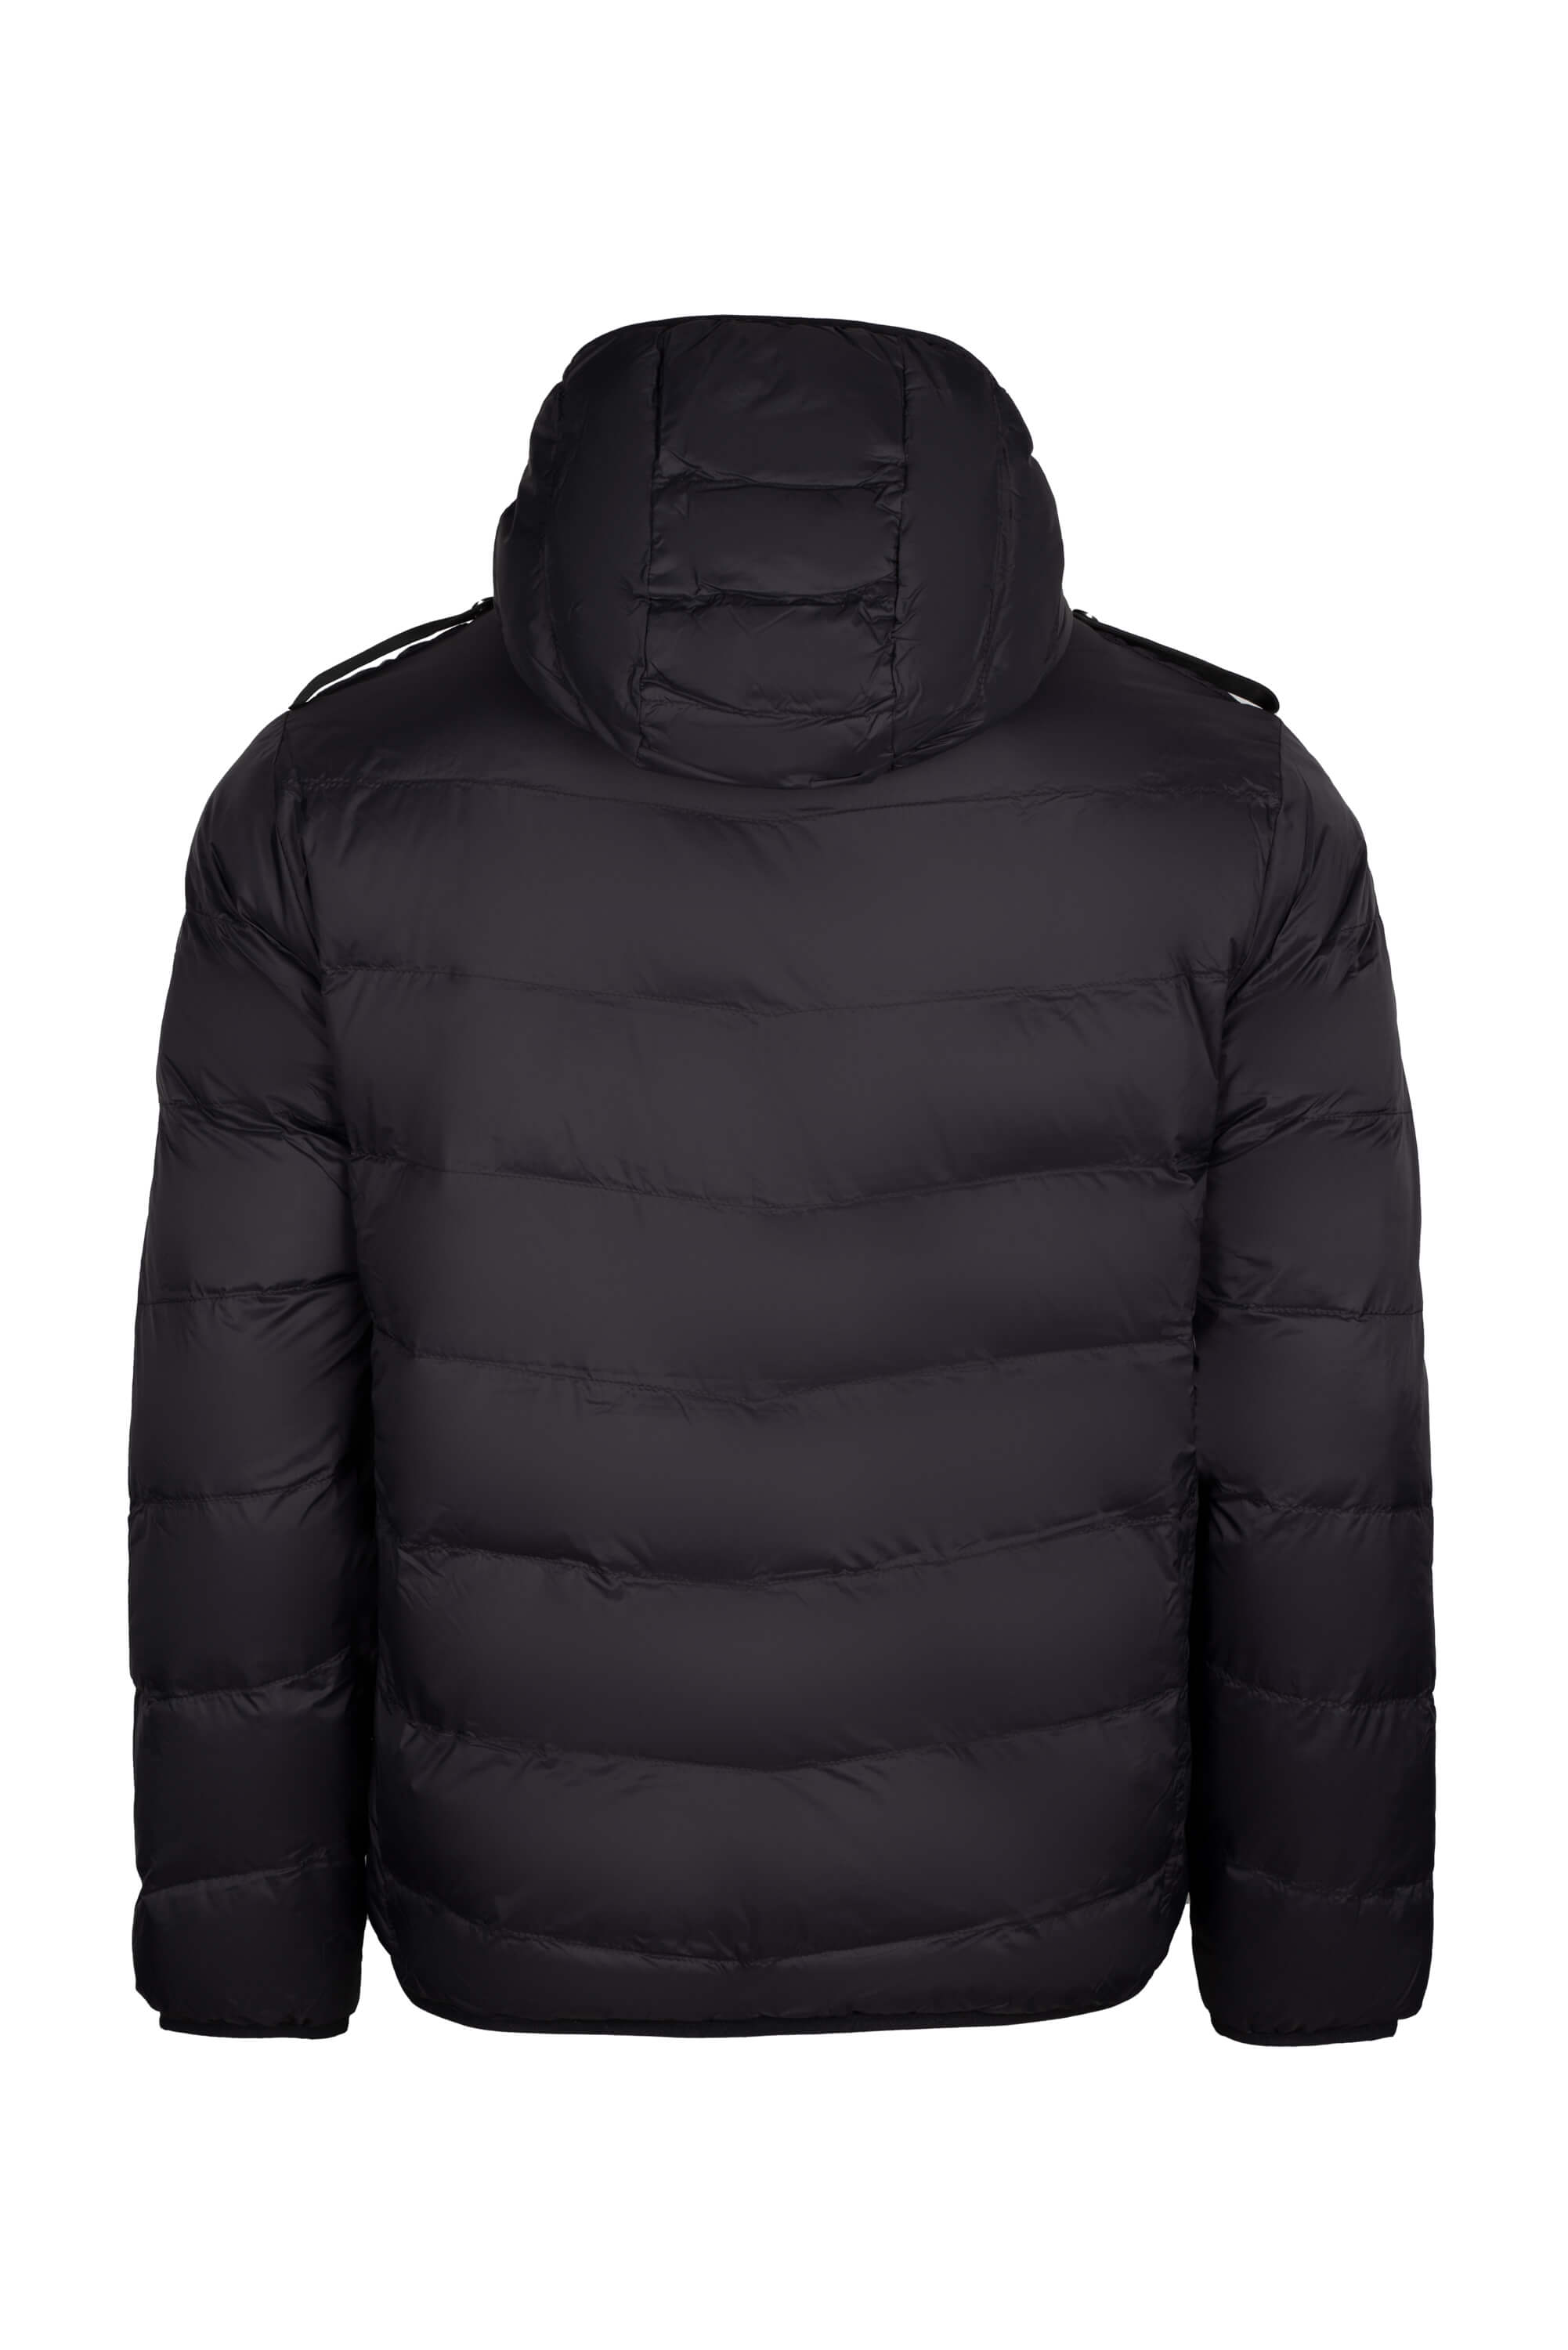 Loft jacket, black, unisex | LHD Group